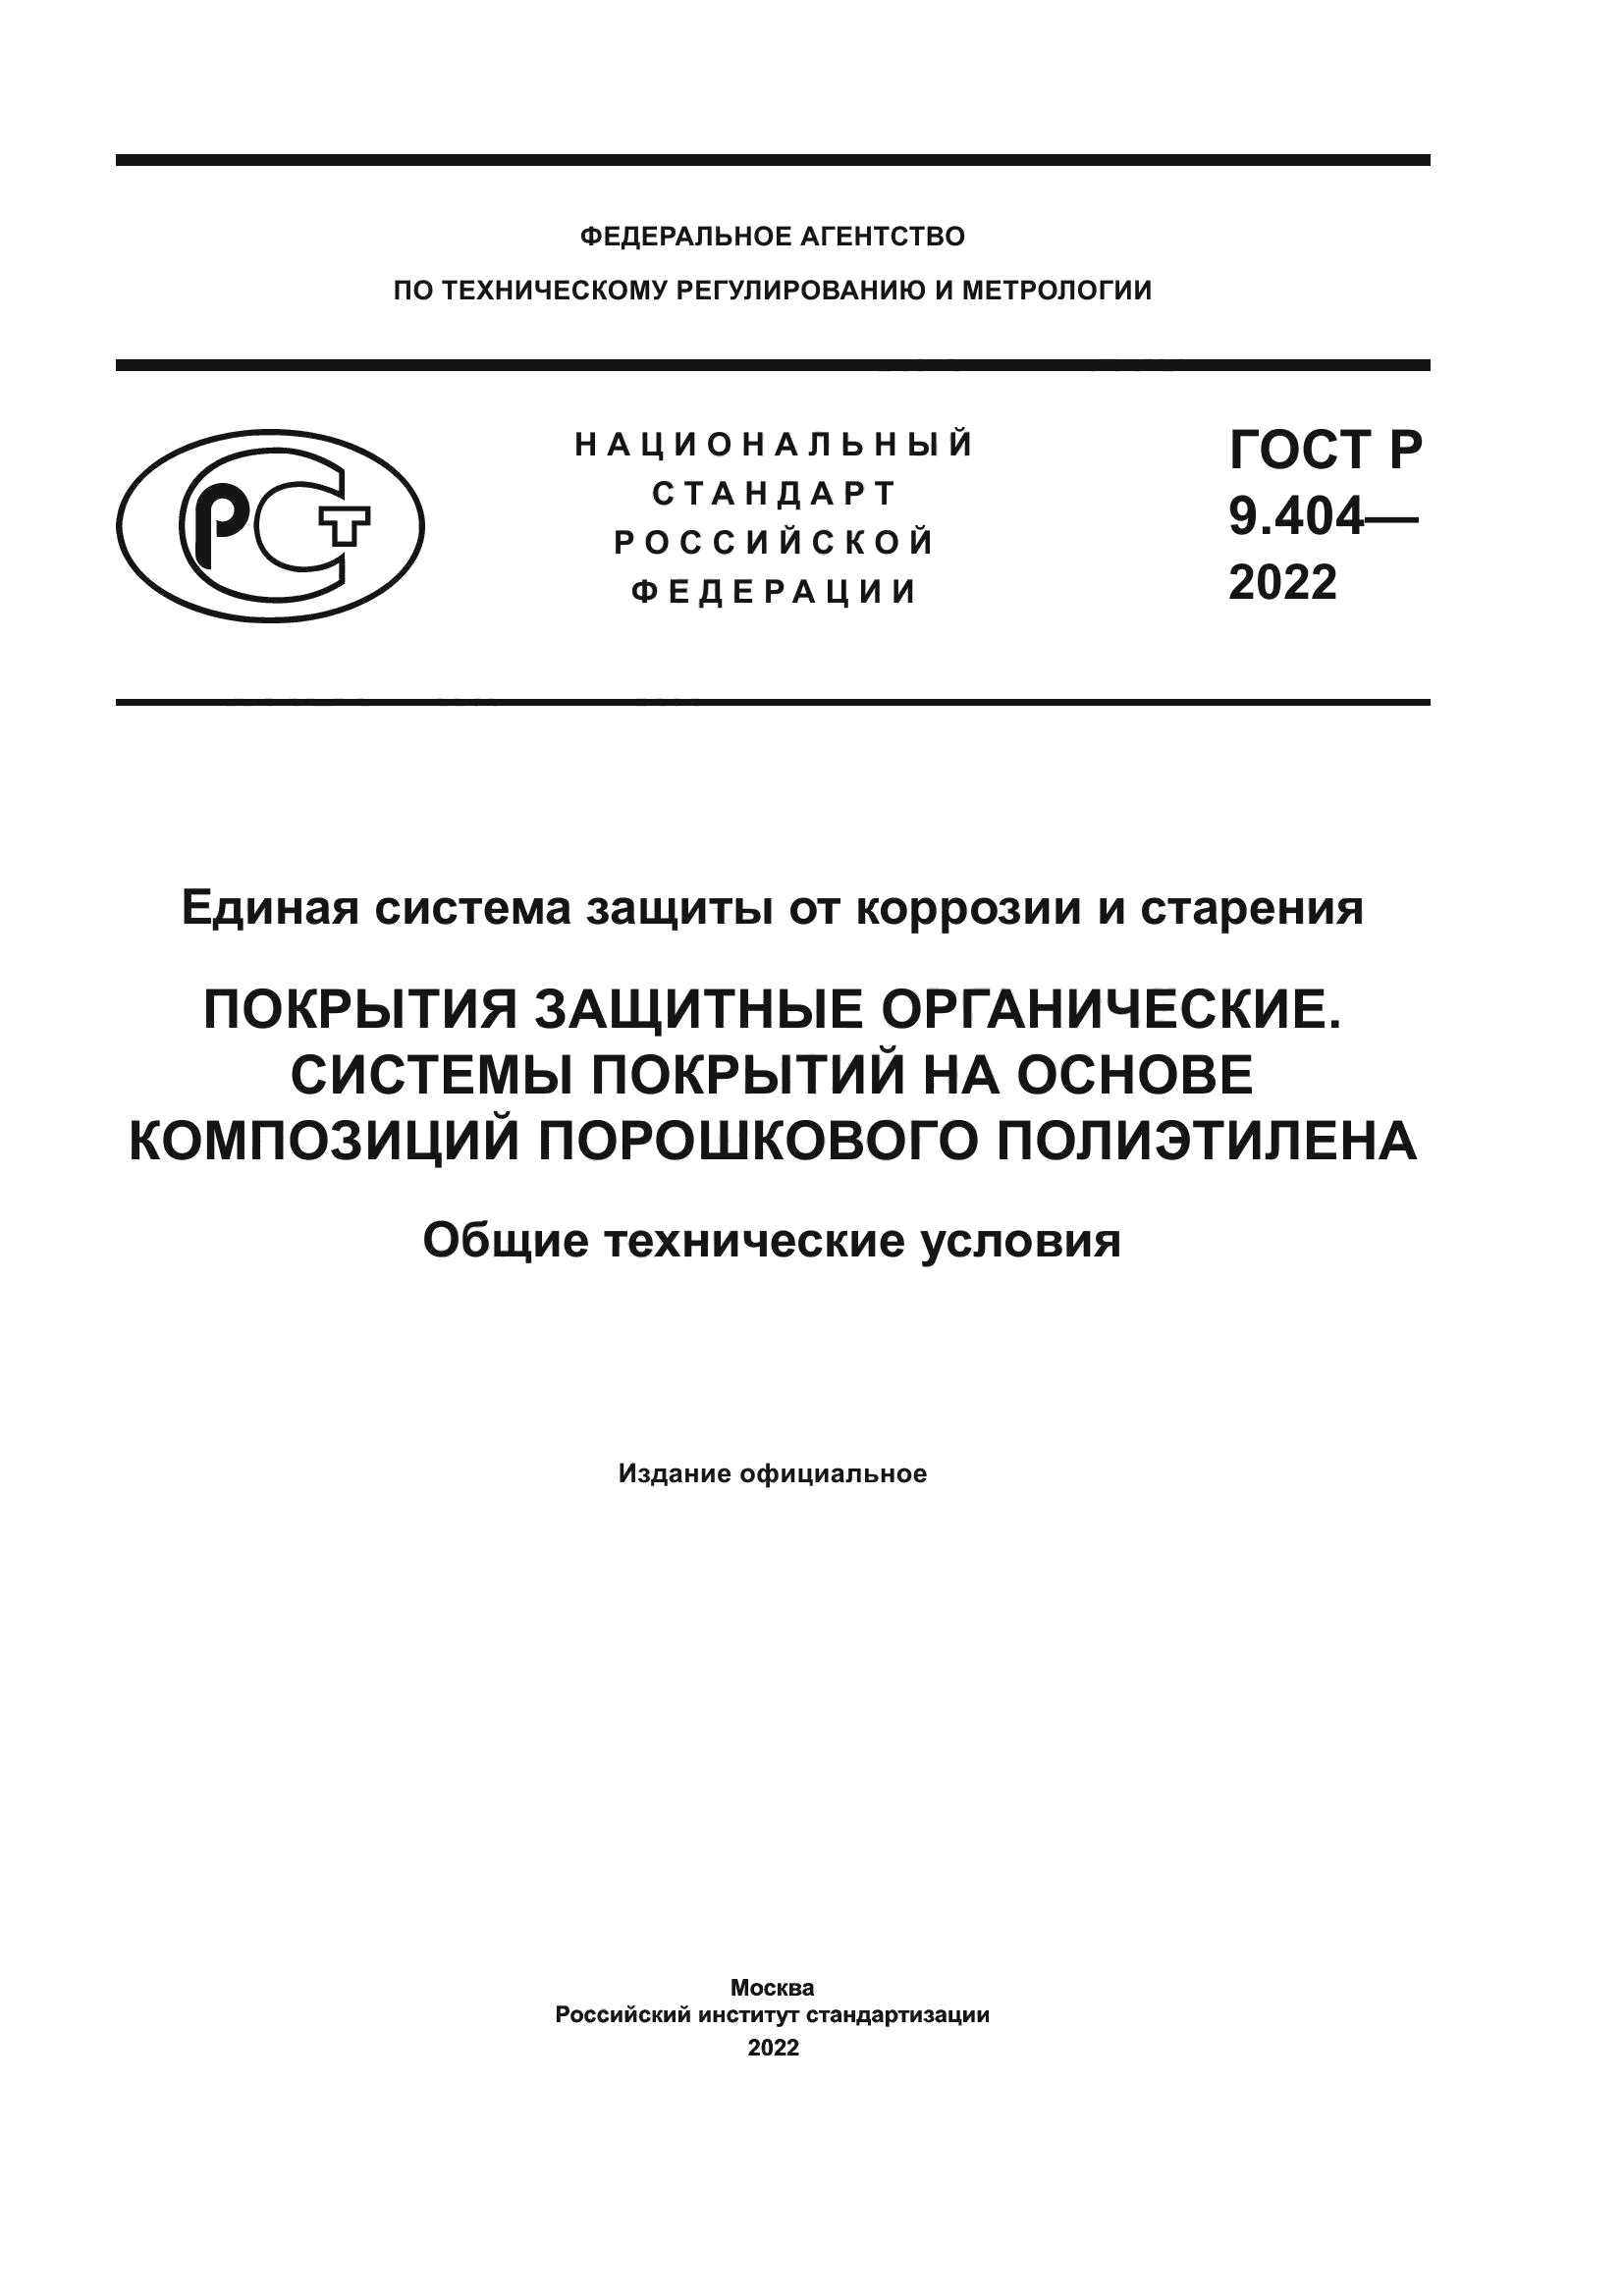 ГОСТ Р 9.404-2022